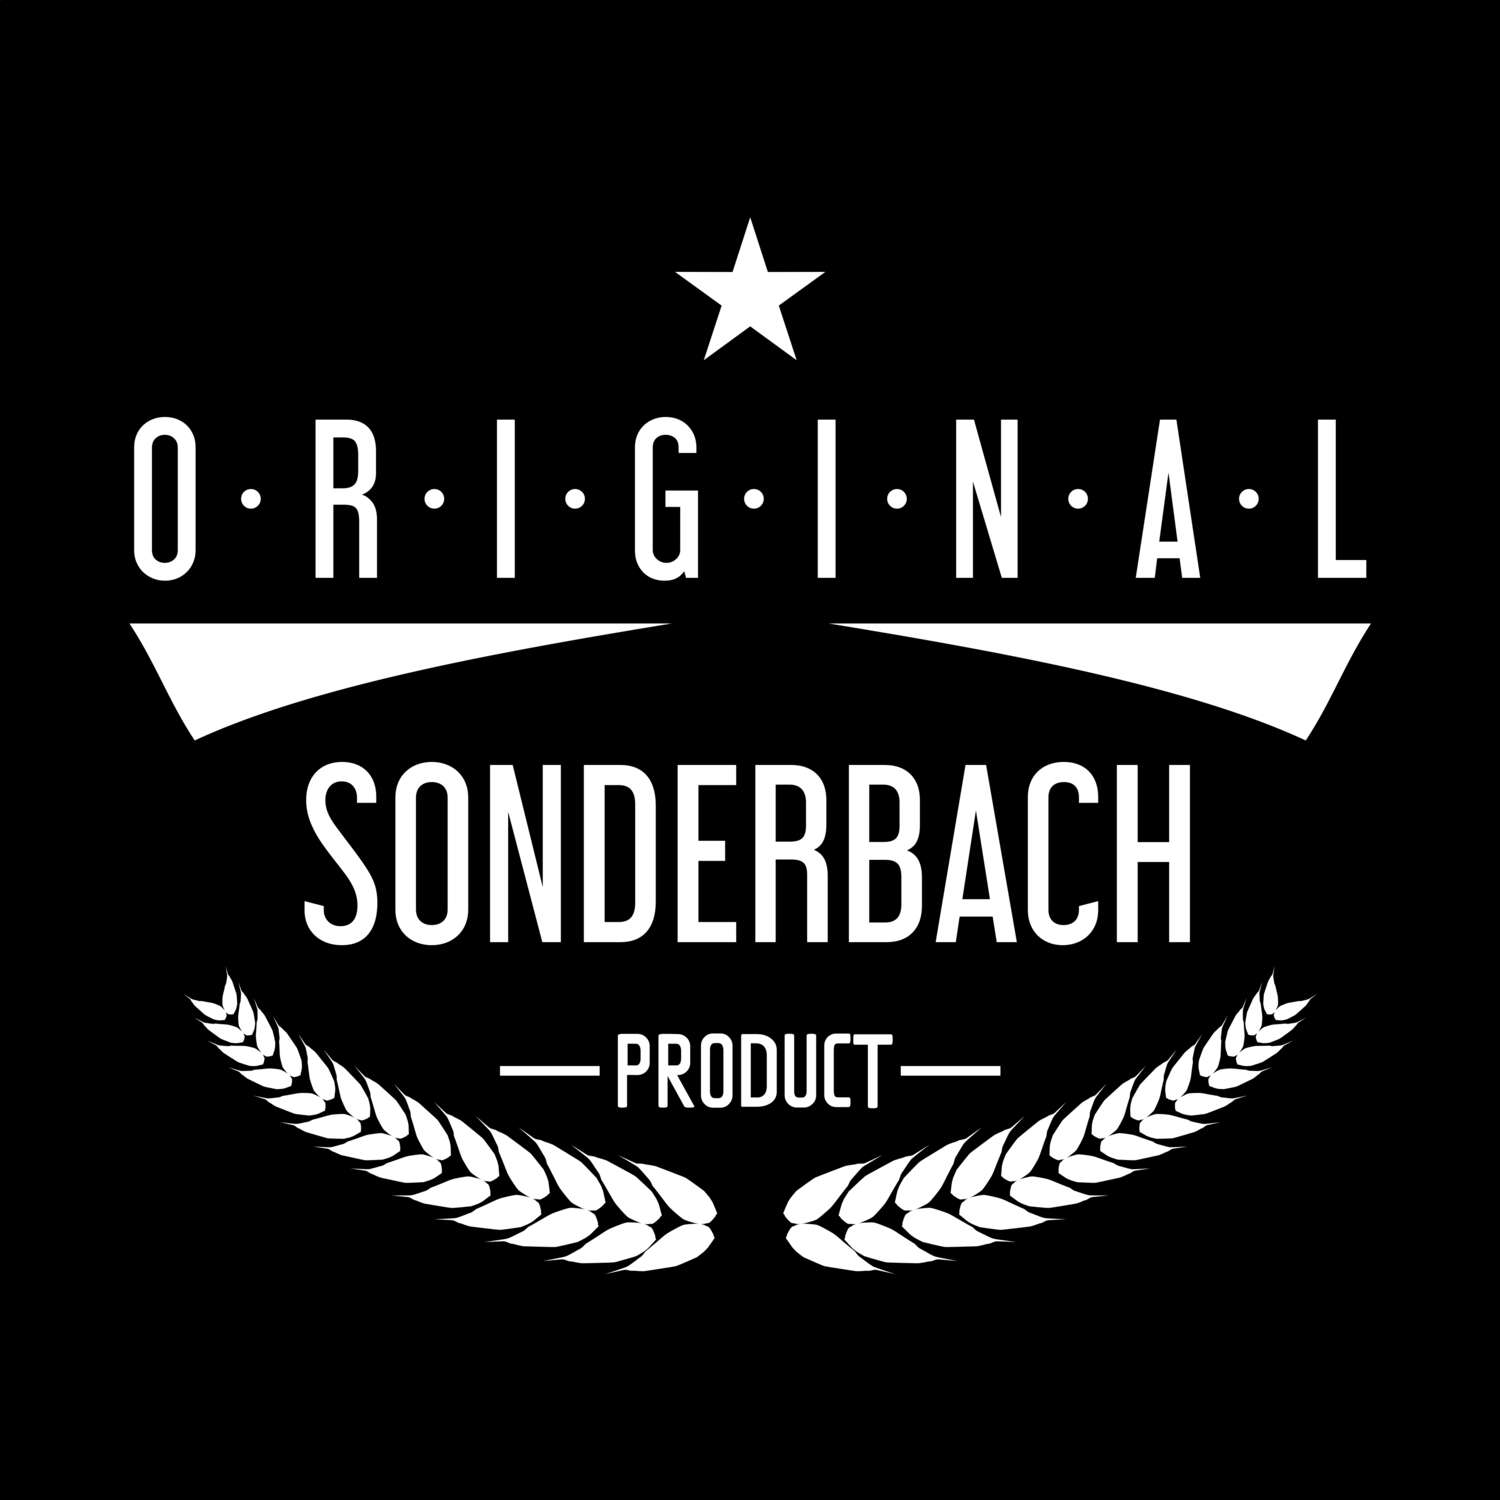 Sonderbach T-Shirt »Original Product«